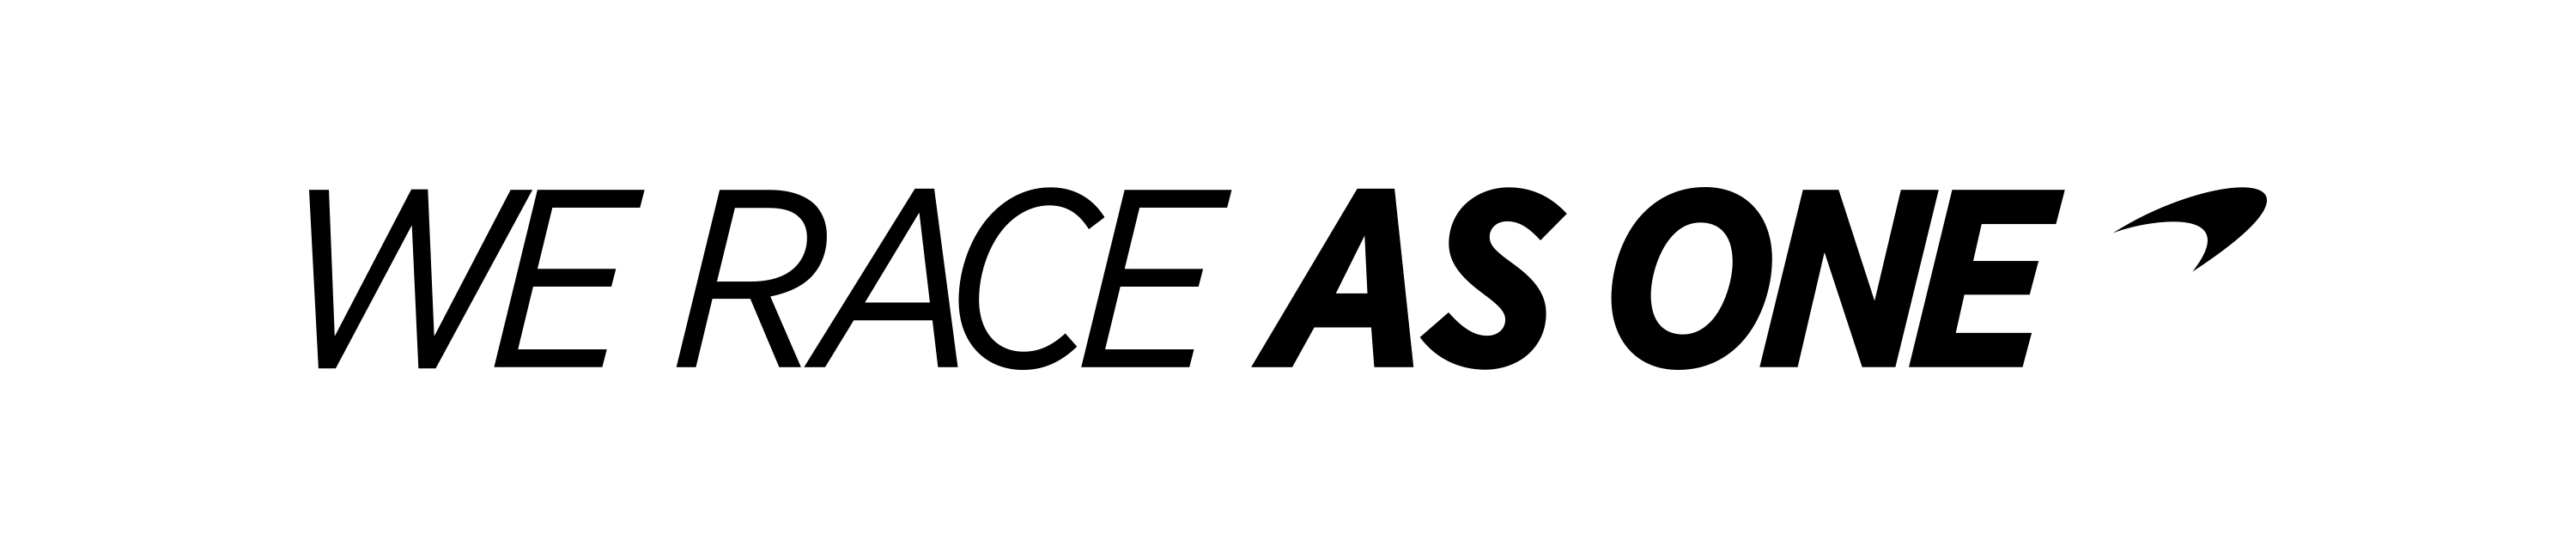 Mclaren Logo PNG Background